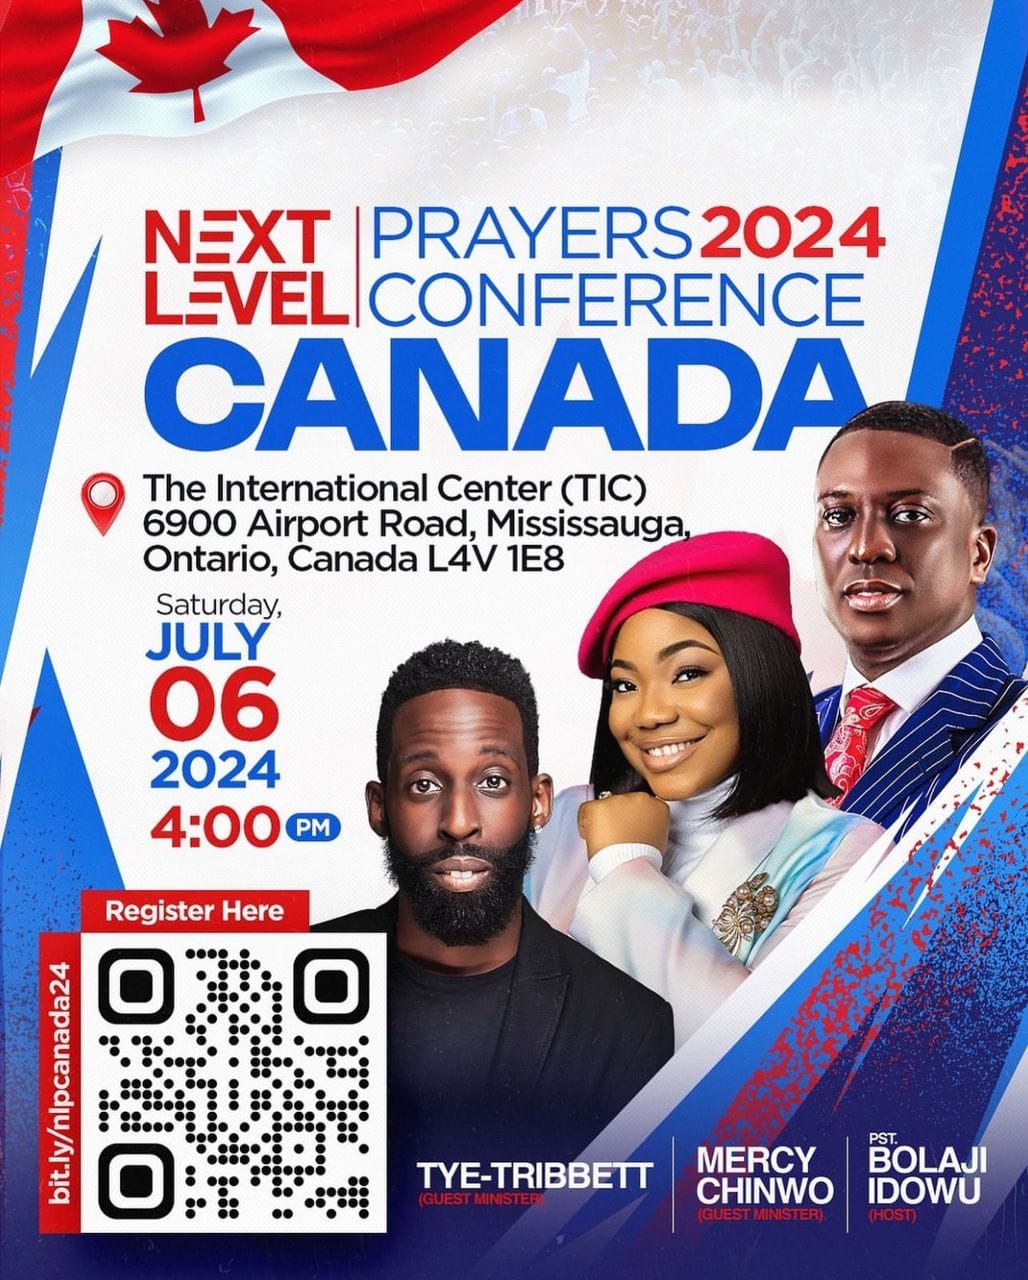 NEXT LEVEL PRAYER CONFERENCE CANADA 2024